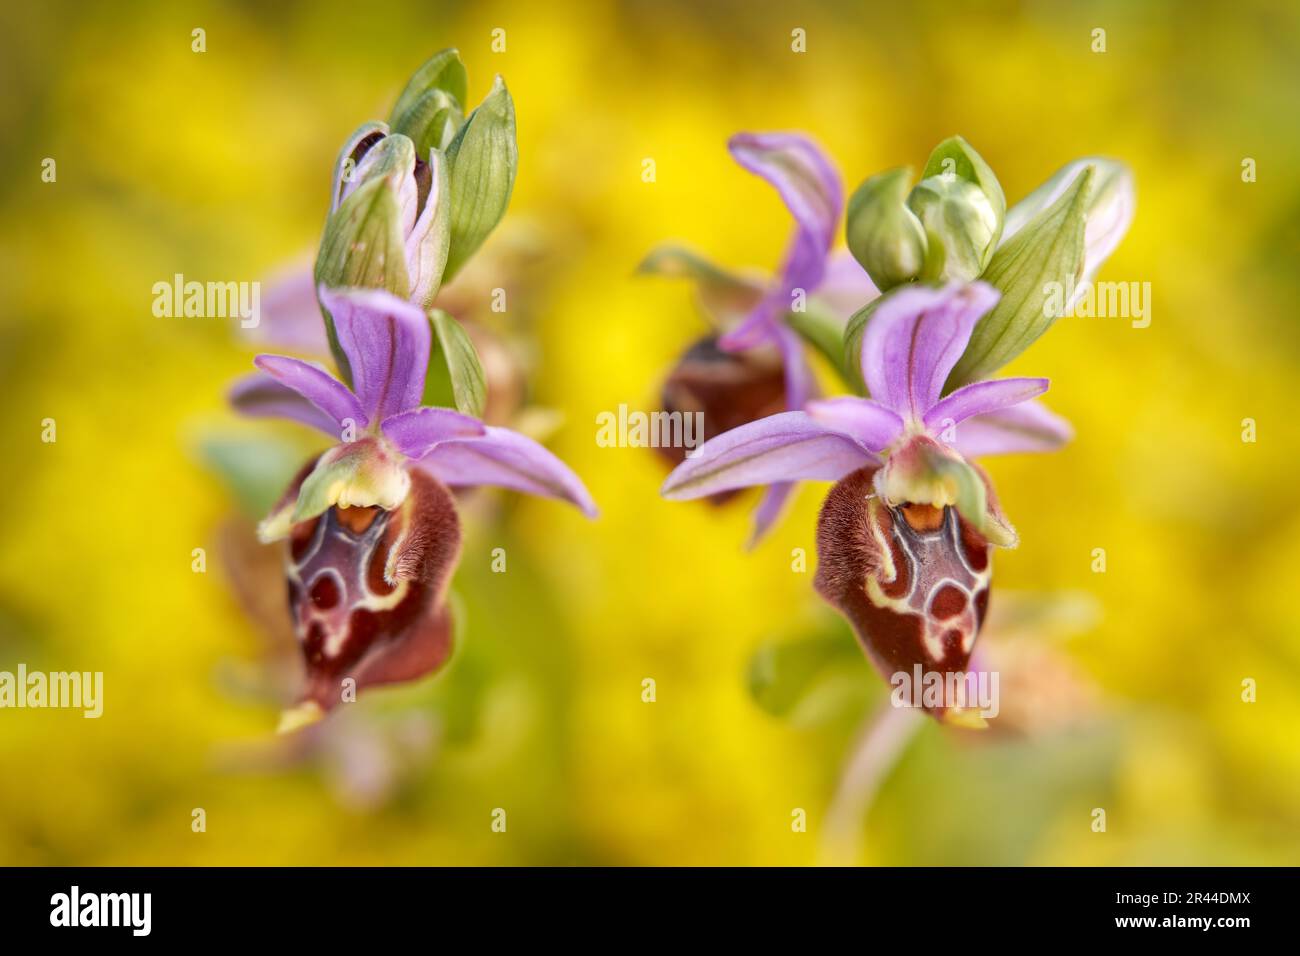 Ophrys apulica, Ophrys pugliese, Gargano in Italia. Orchidea selvatica terrestre europea fiorente, habitat naturale. Bellissimo dettaglio di fioritura, scena primaverile Foto Stock